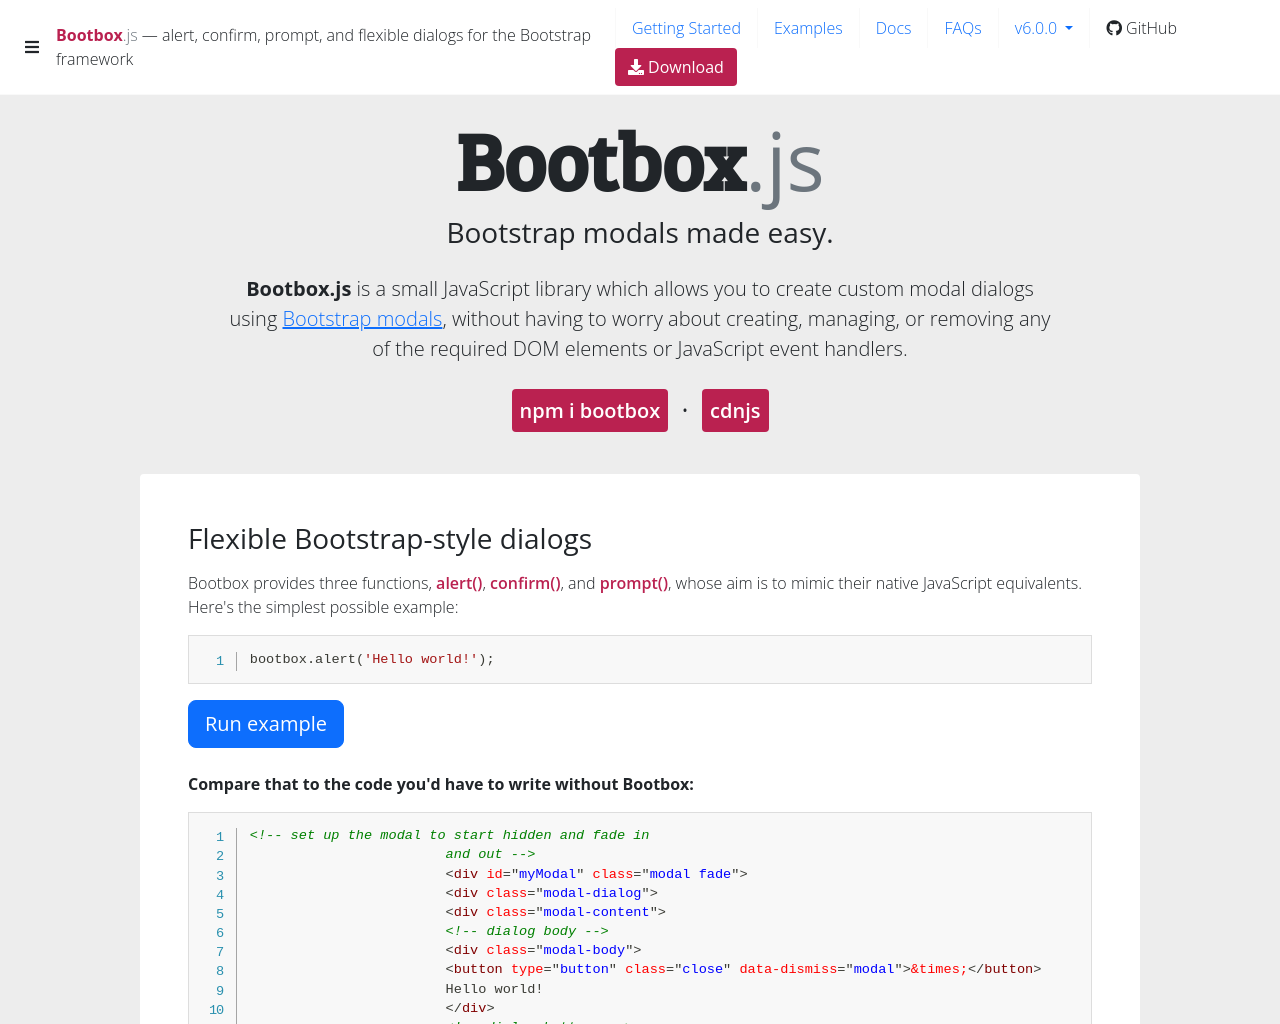 bootboxjs.com